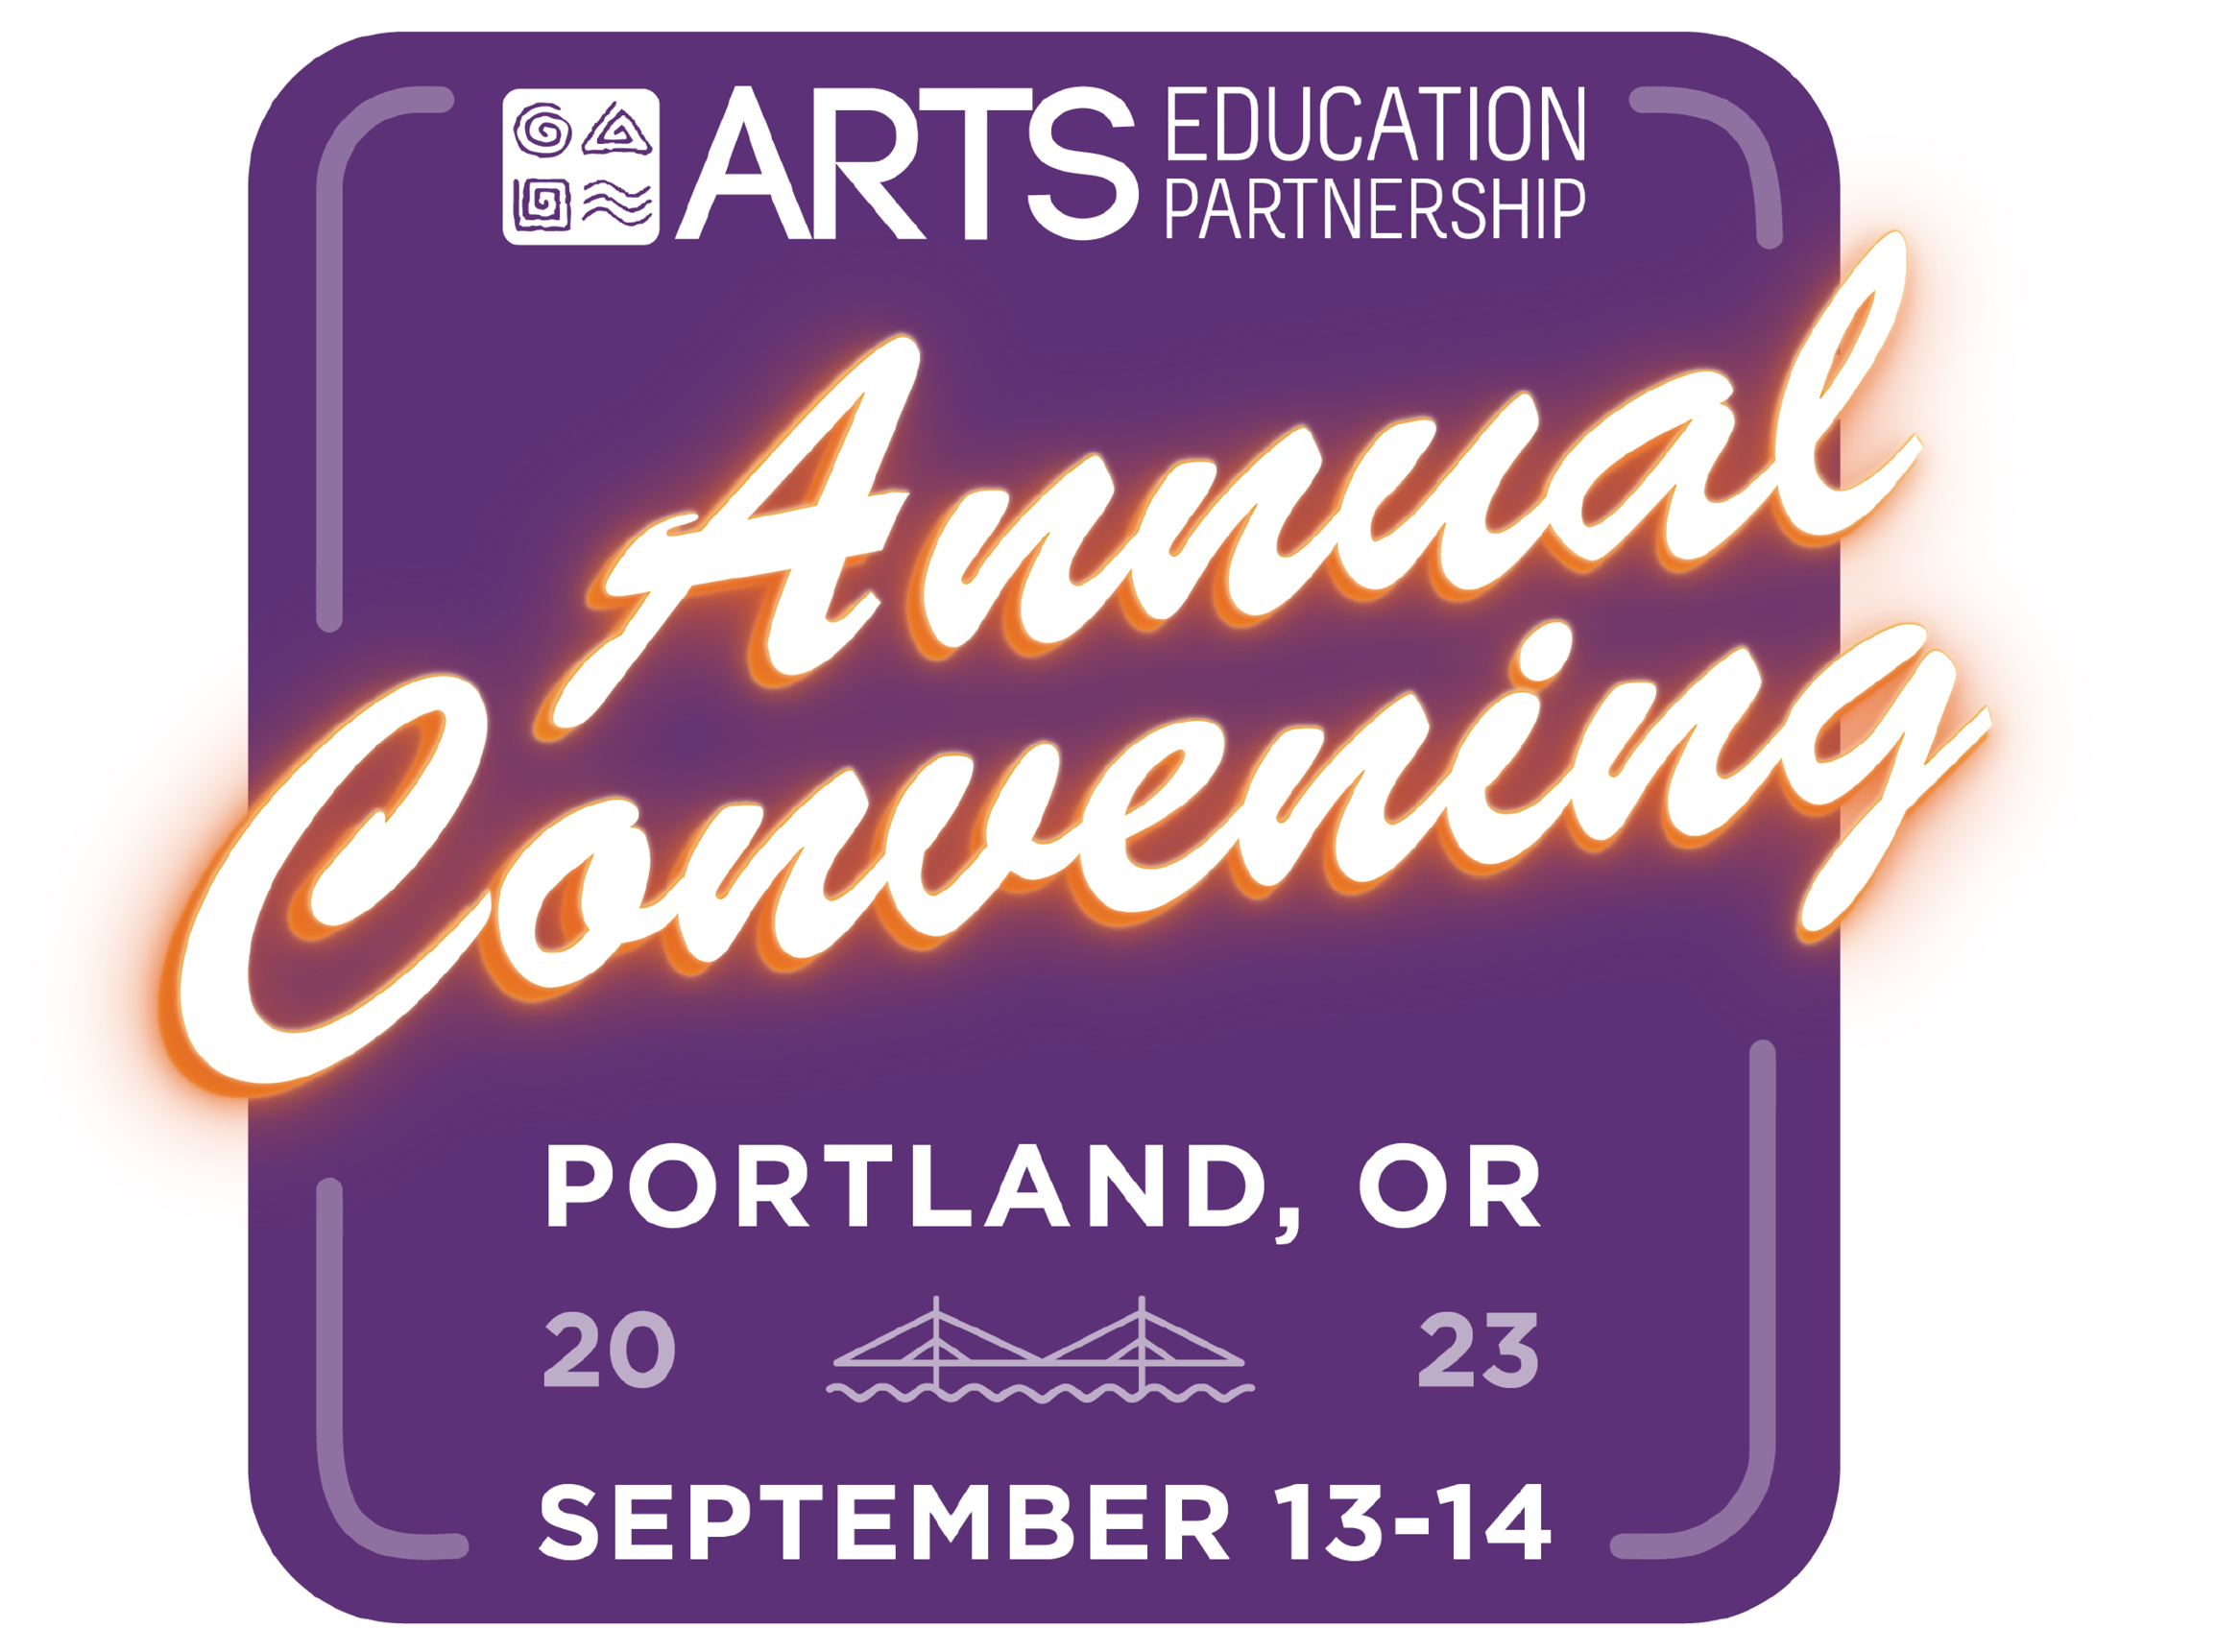 Arts Education Partnership Annual Convening, Portland, Oregon, September 13-14